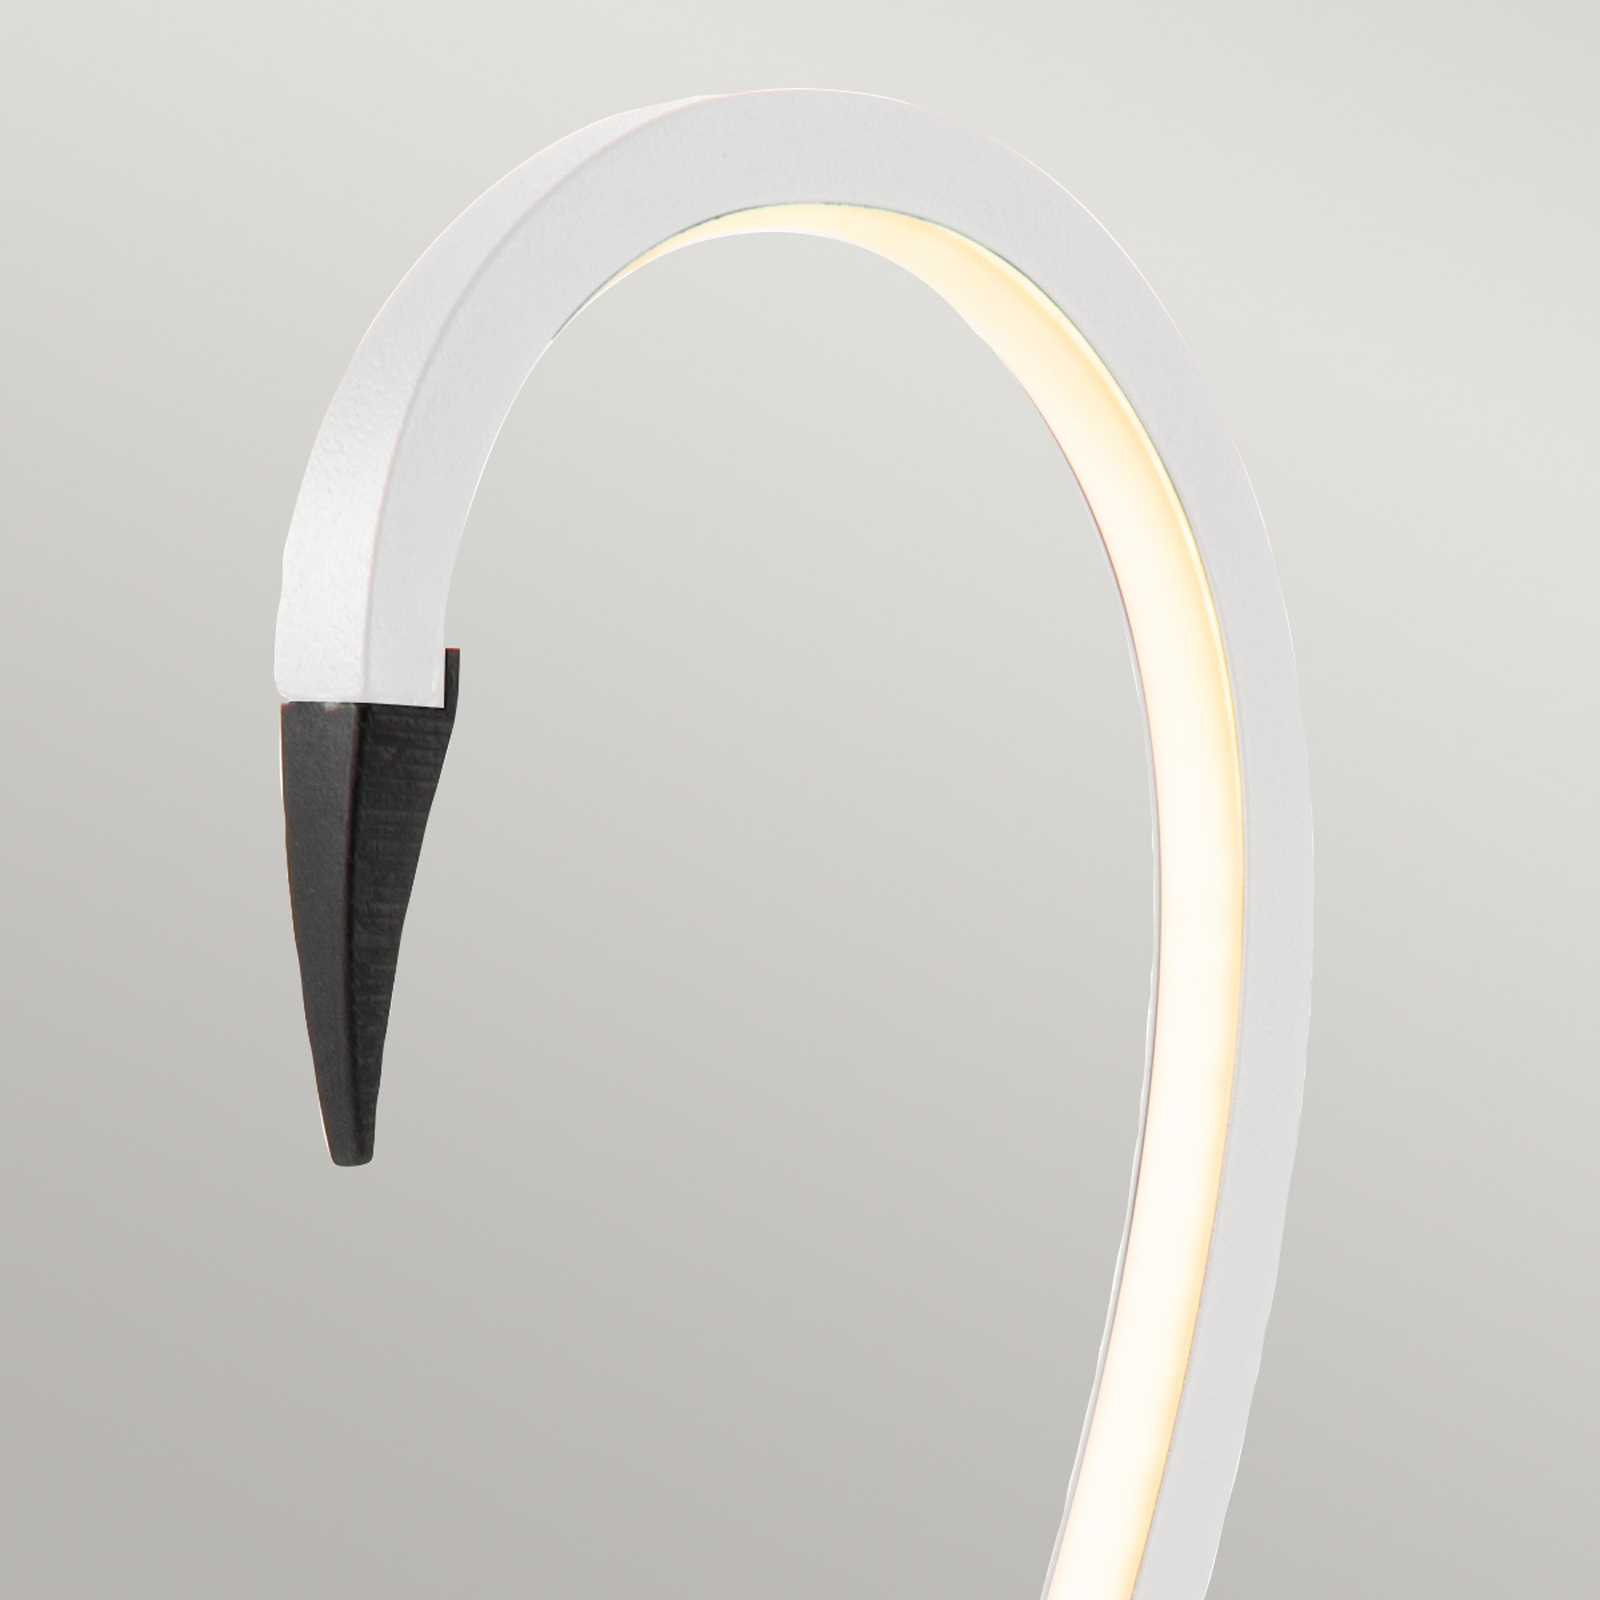 Stolní lampa LED Flamingo, bílá, kov, výška 50 cm